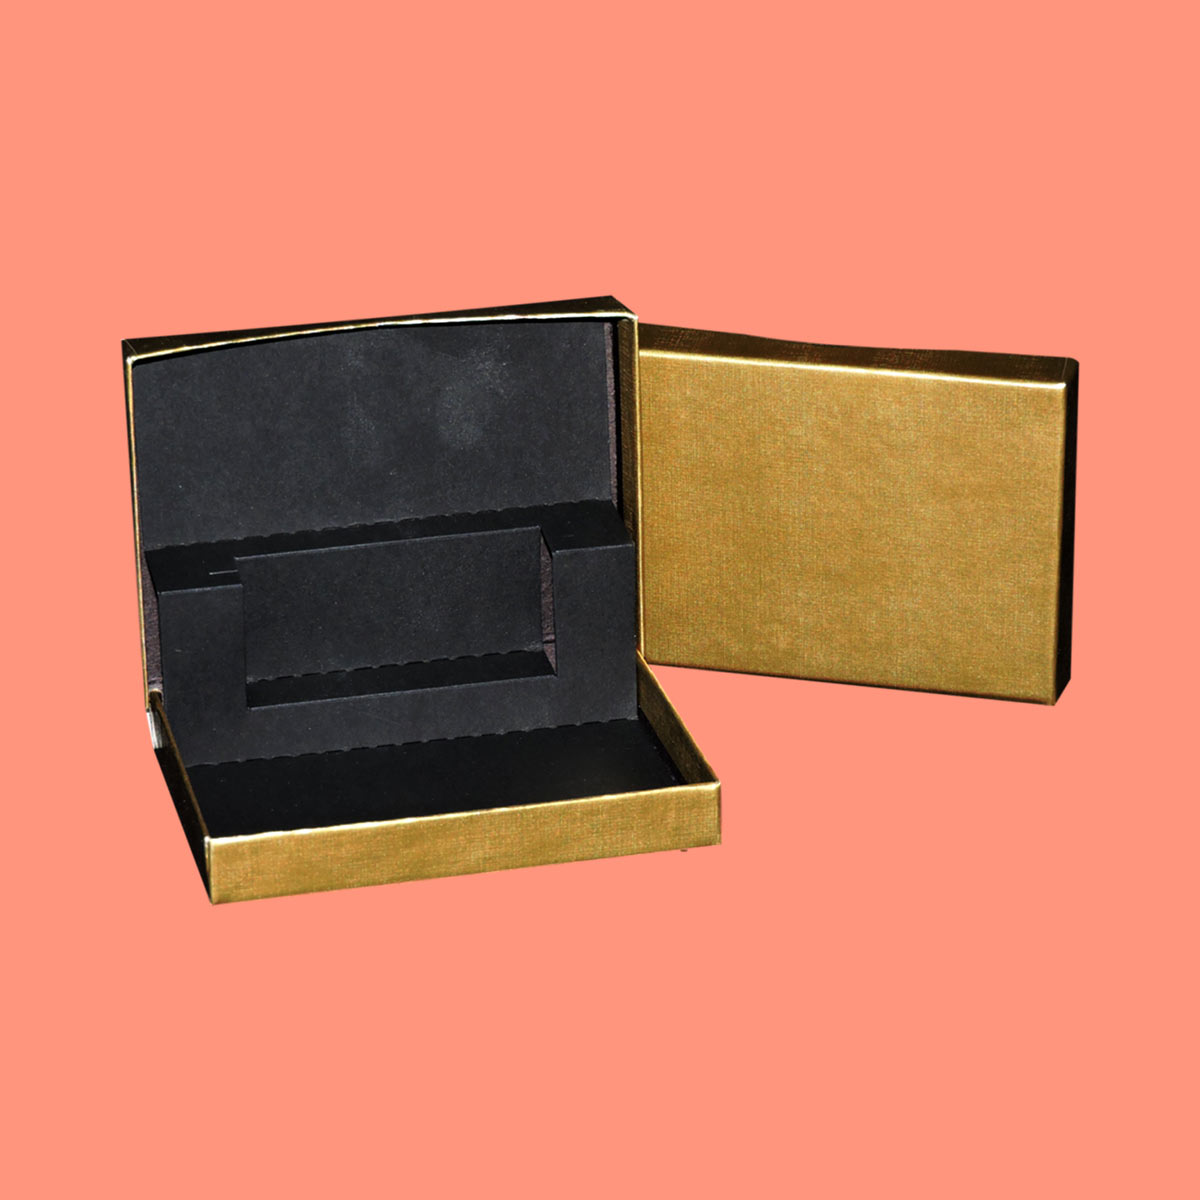 Custom Gift Card Boxes Wholesale - Gift Card Holder Box